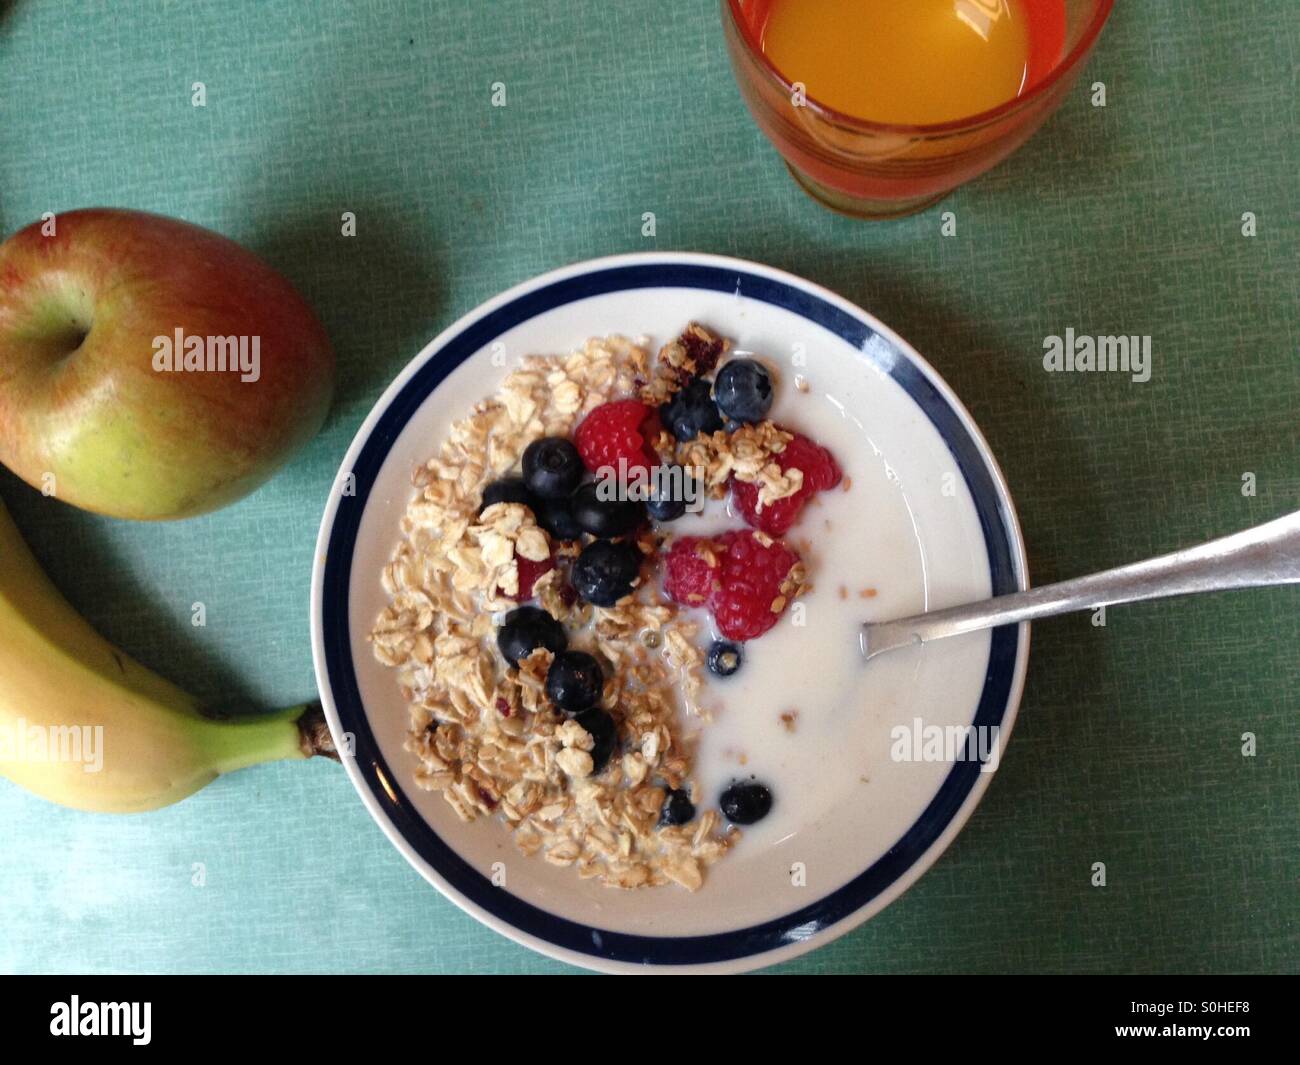 Oatmeal and fruit breakfast Stock Photo